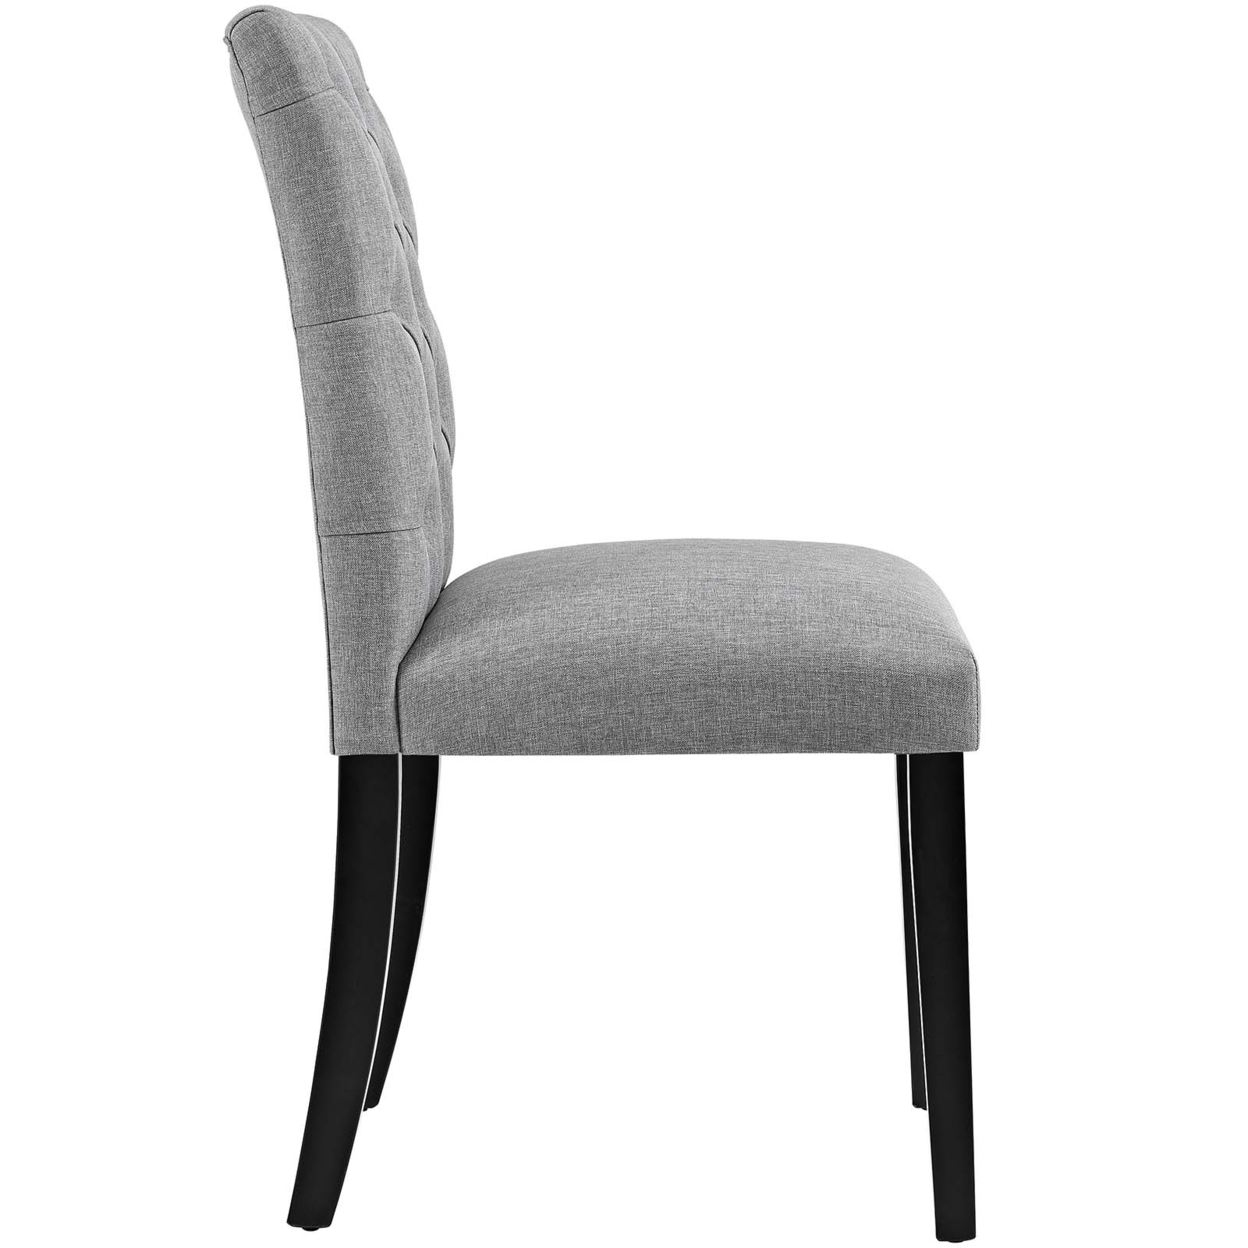 Duchess Dining Chair Fabric Set Of 4,Light Gray